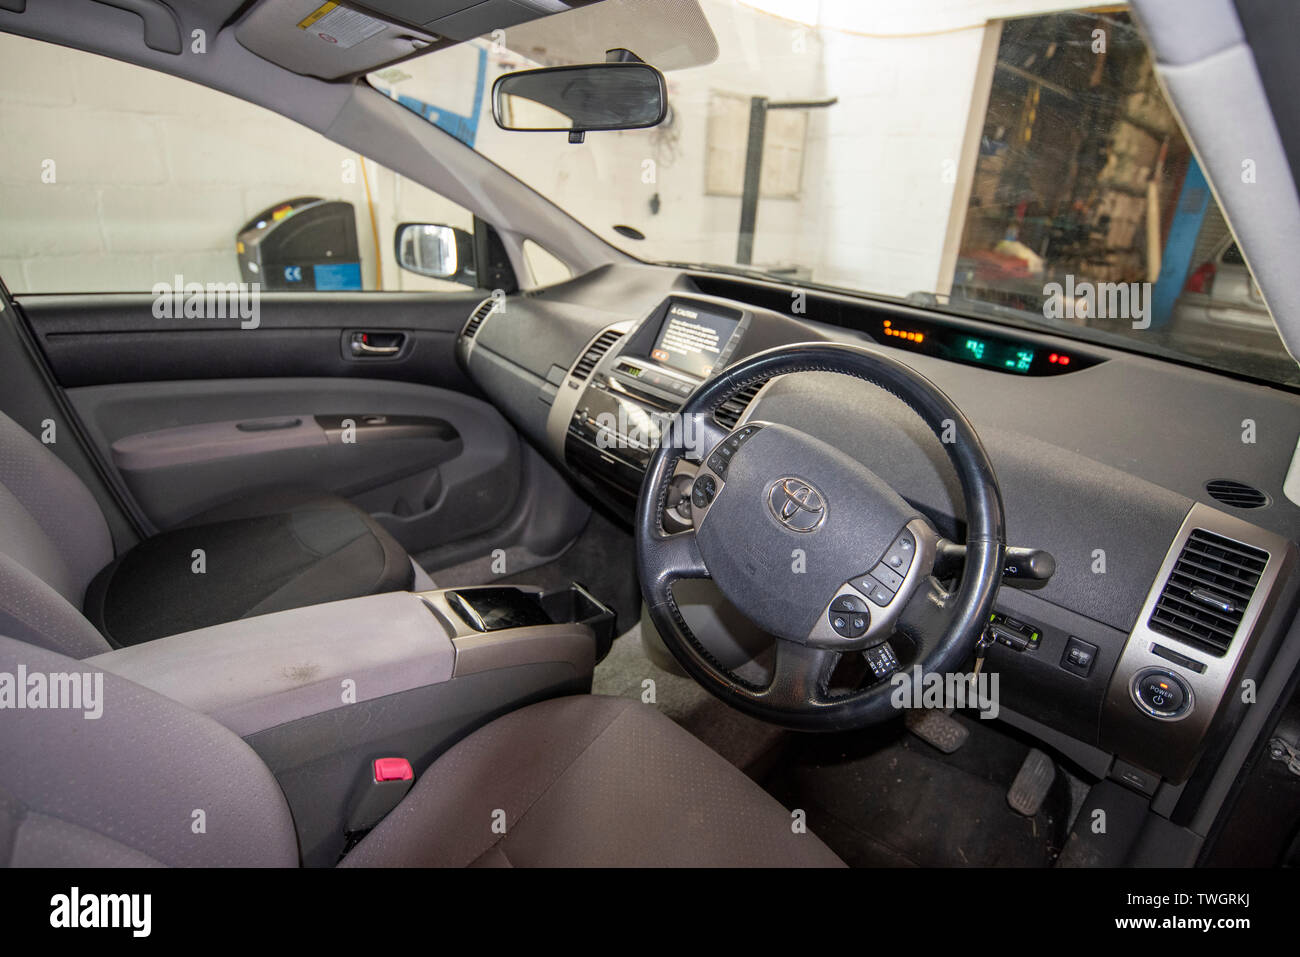 Toyota Prius, stolen Catalytic Converter. Inside vehicle. Stock Photo